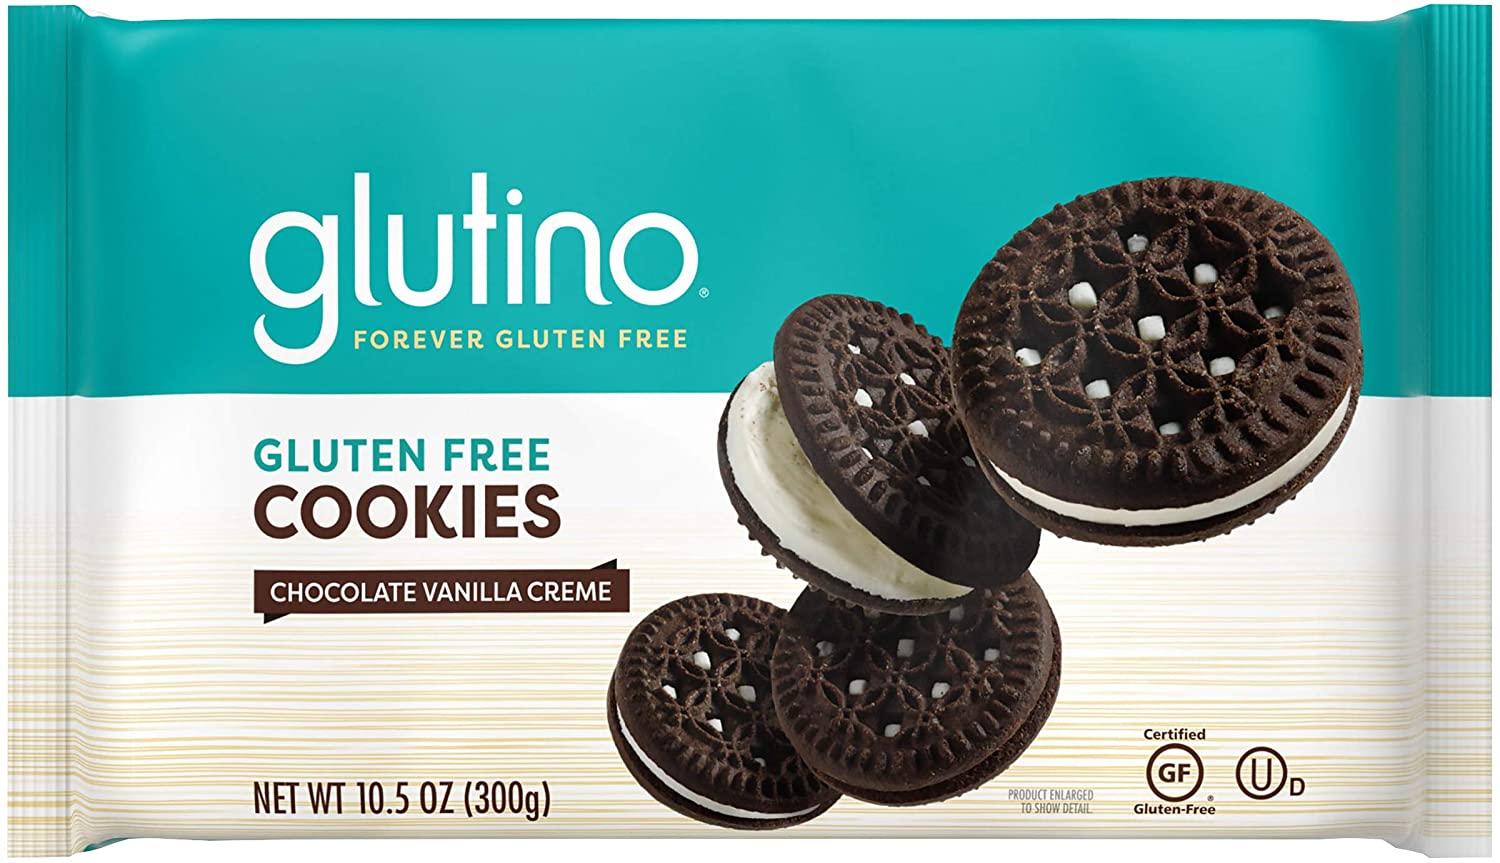 Glutino Chocolate Vanilla Creme Cookies for $2.60 Shipped